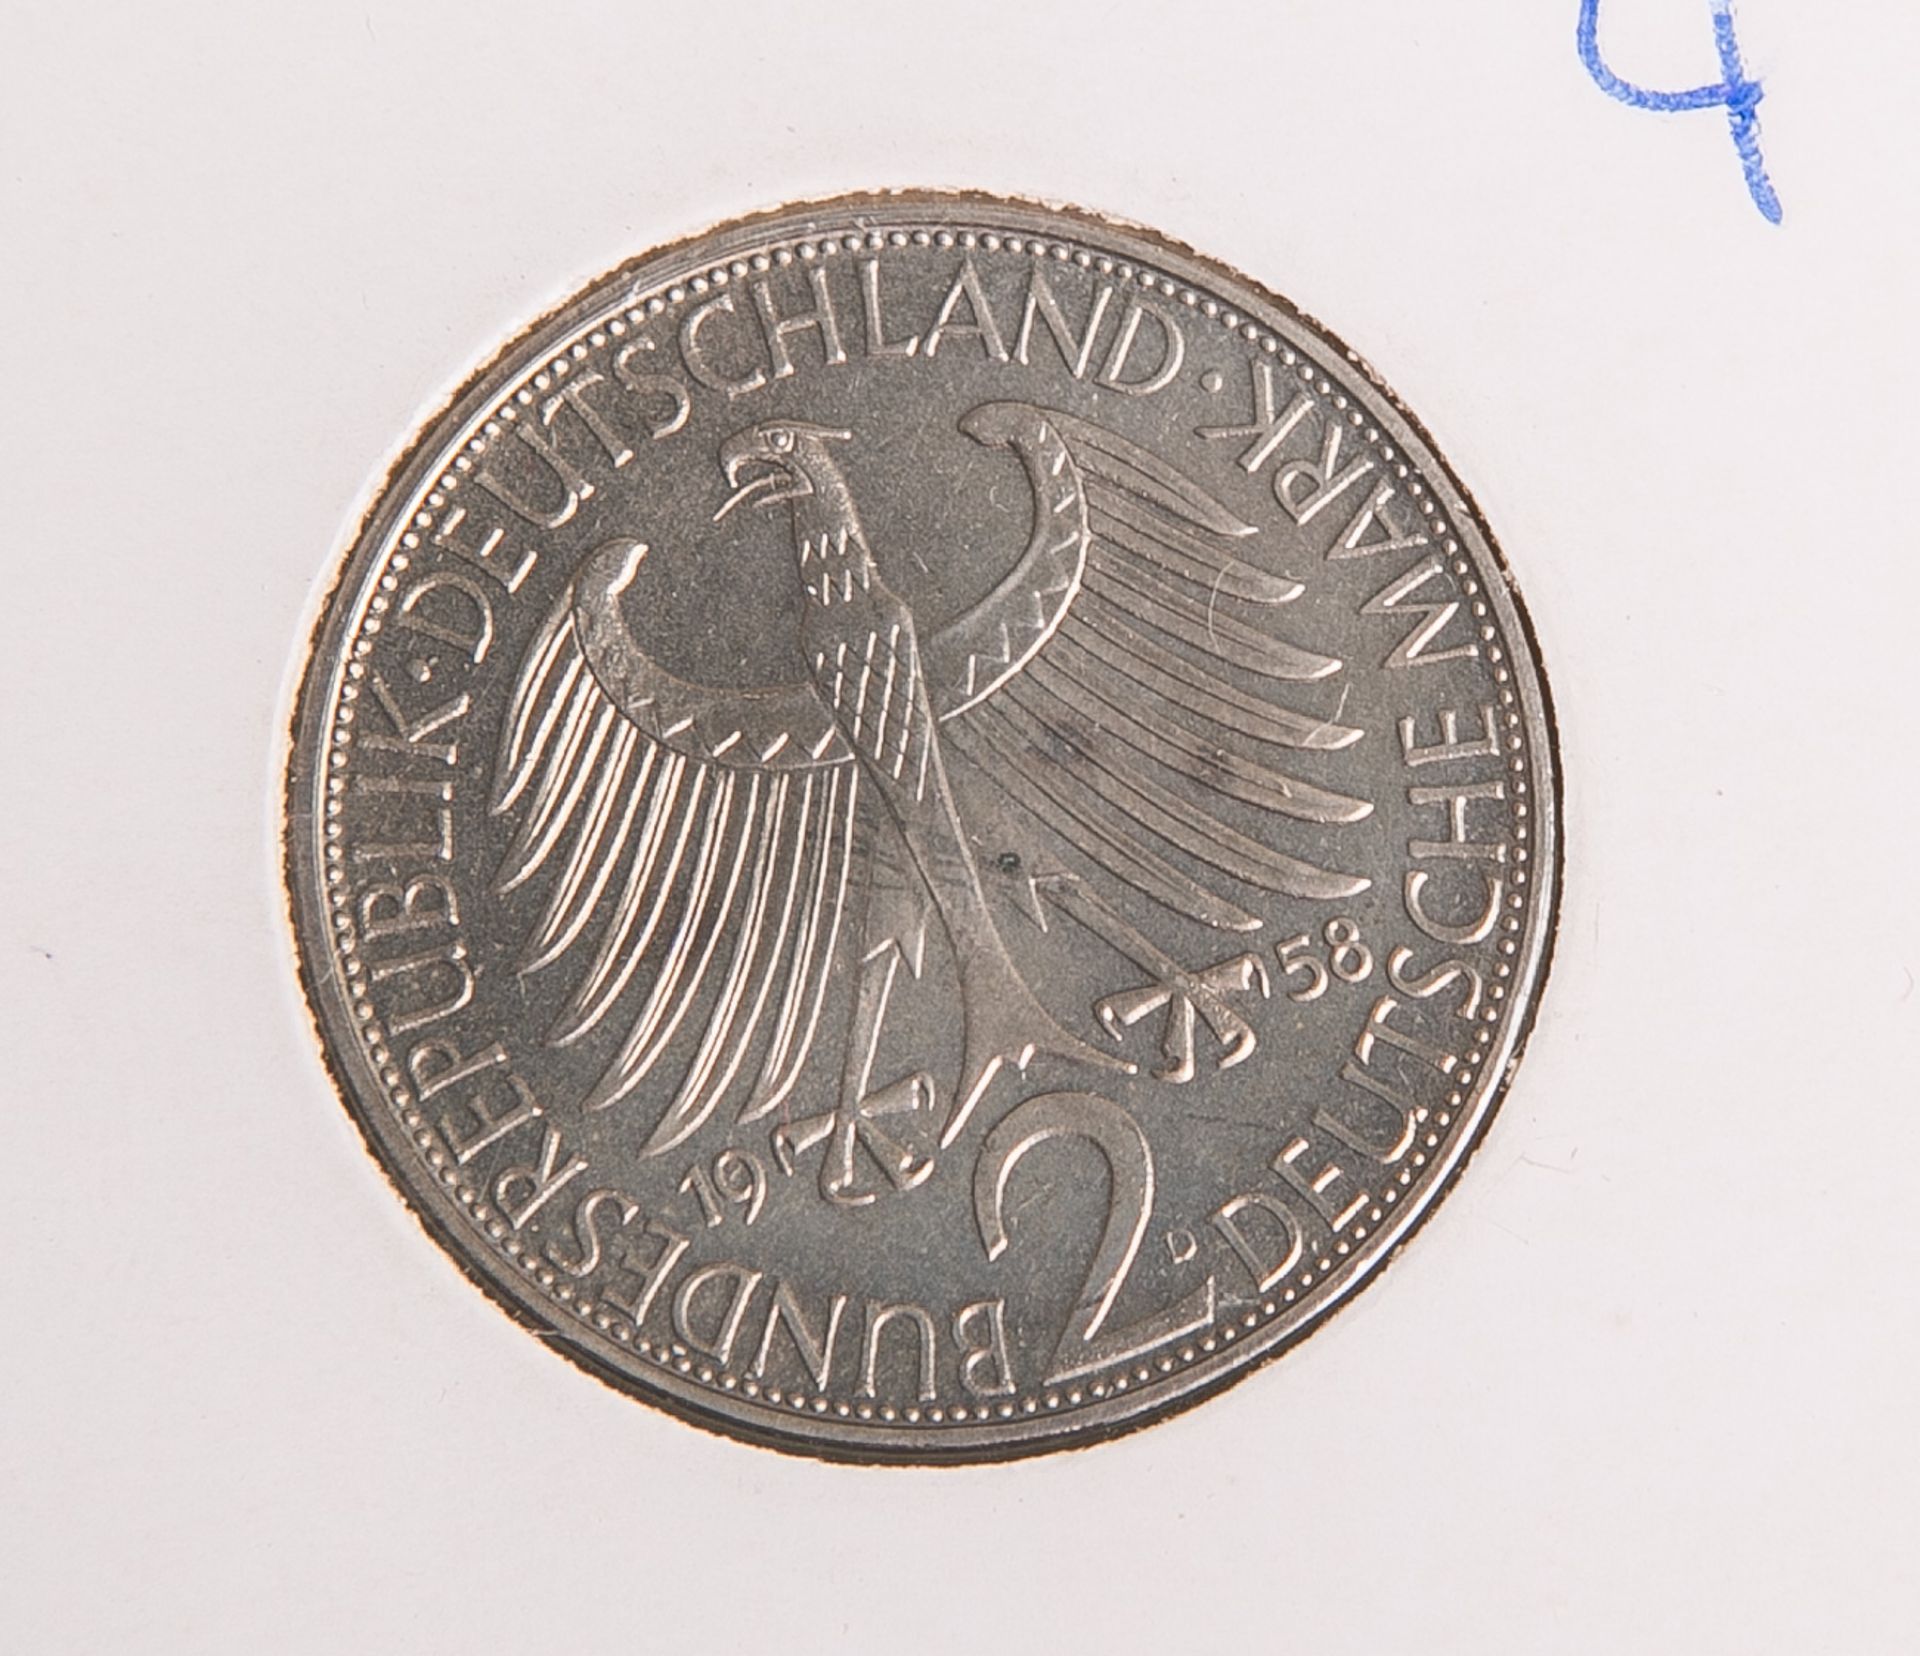 2 DM-Münze "Max Planck" (BRD, 1958), Münzprägestätte: D, Aufl. 1240 Stück, eingeschweißt. - Image 2 of 2